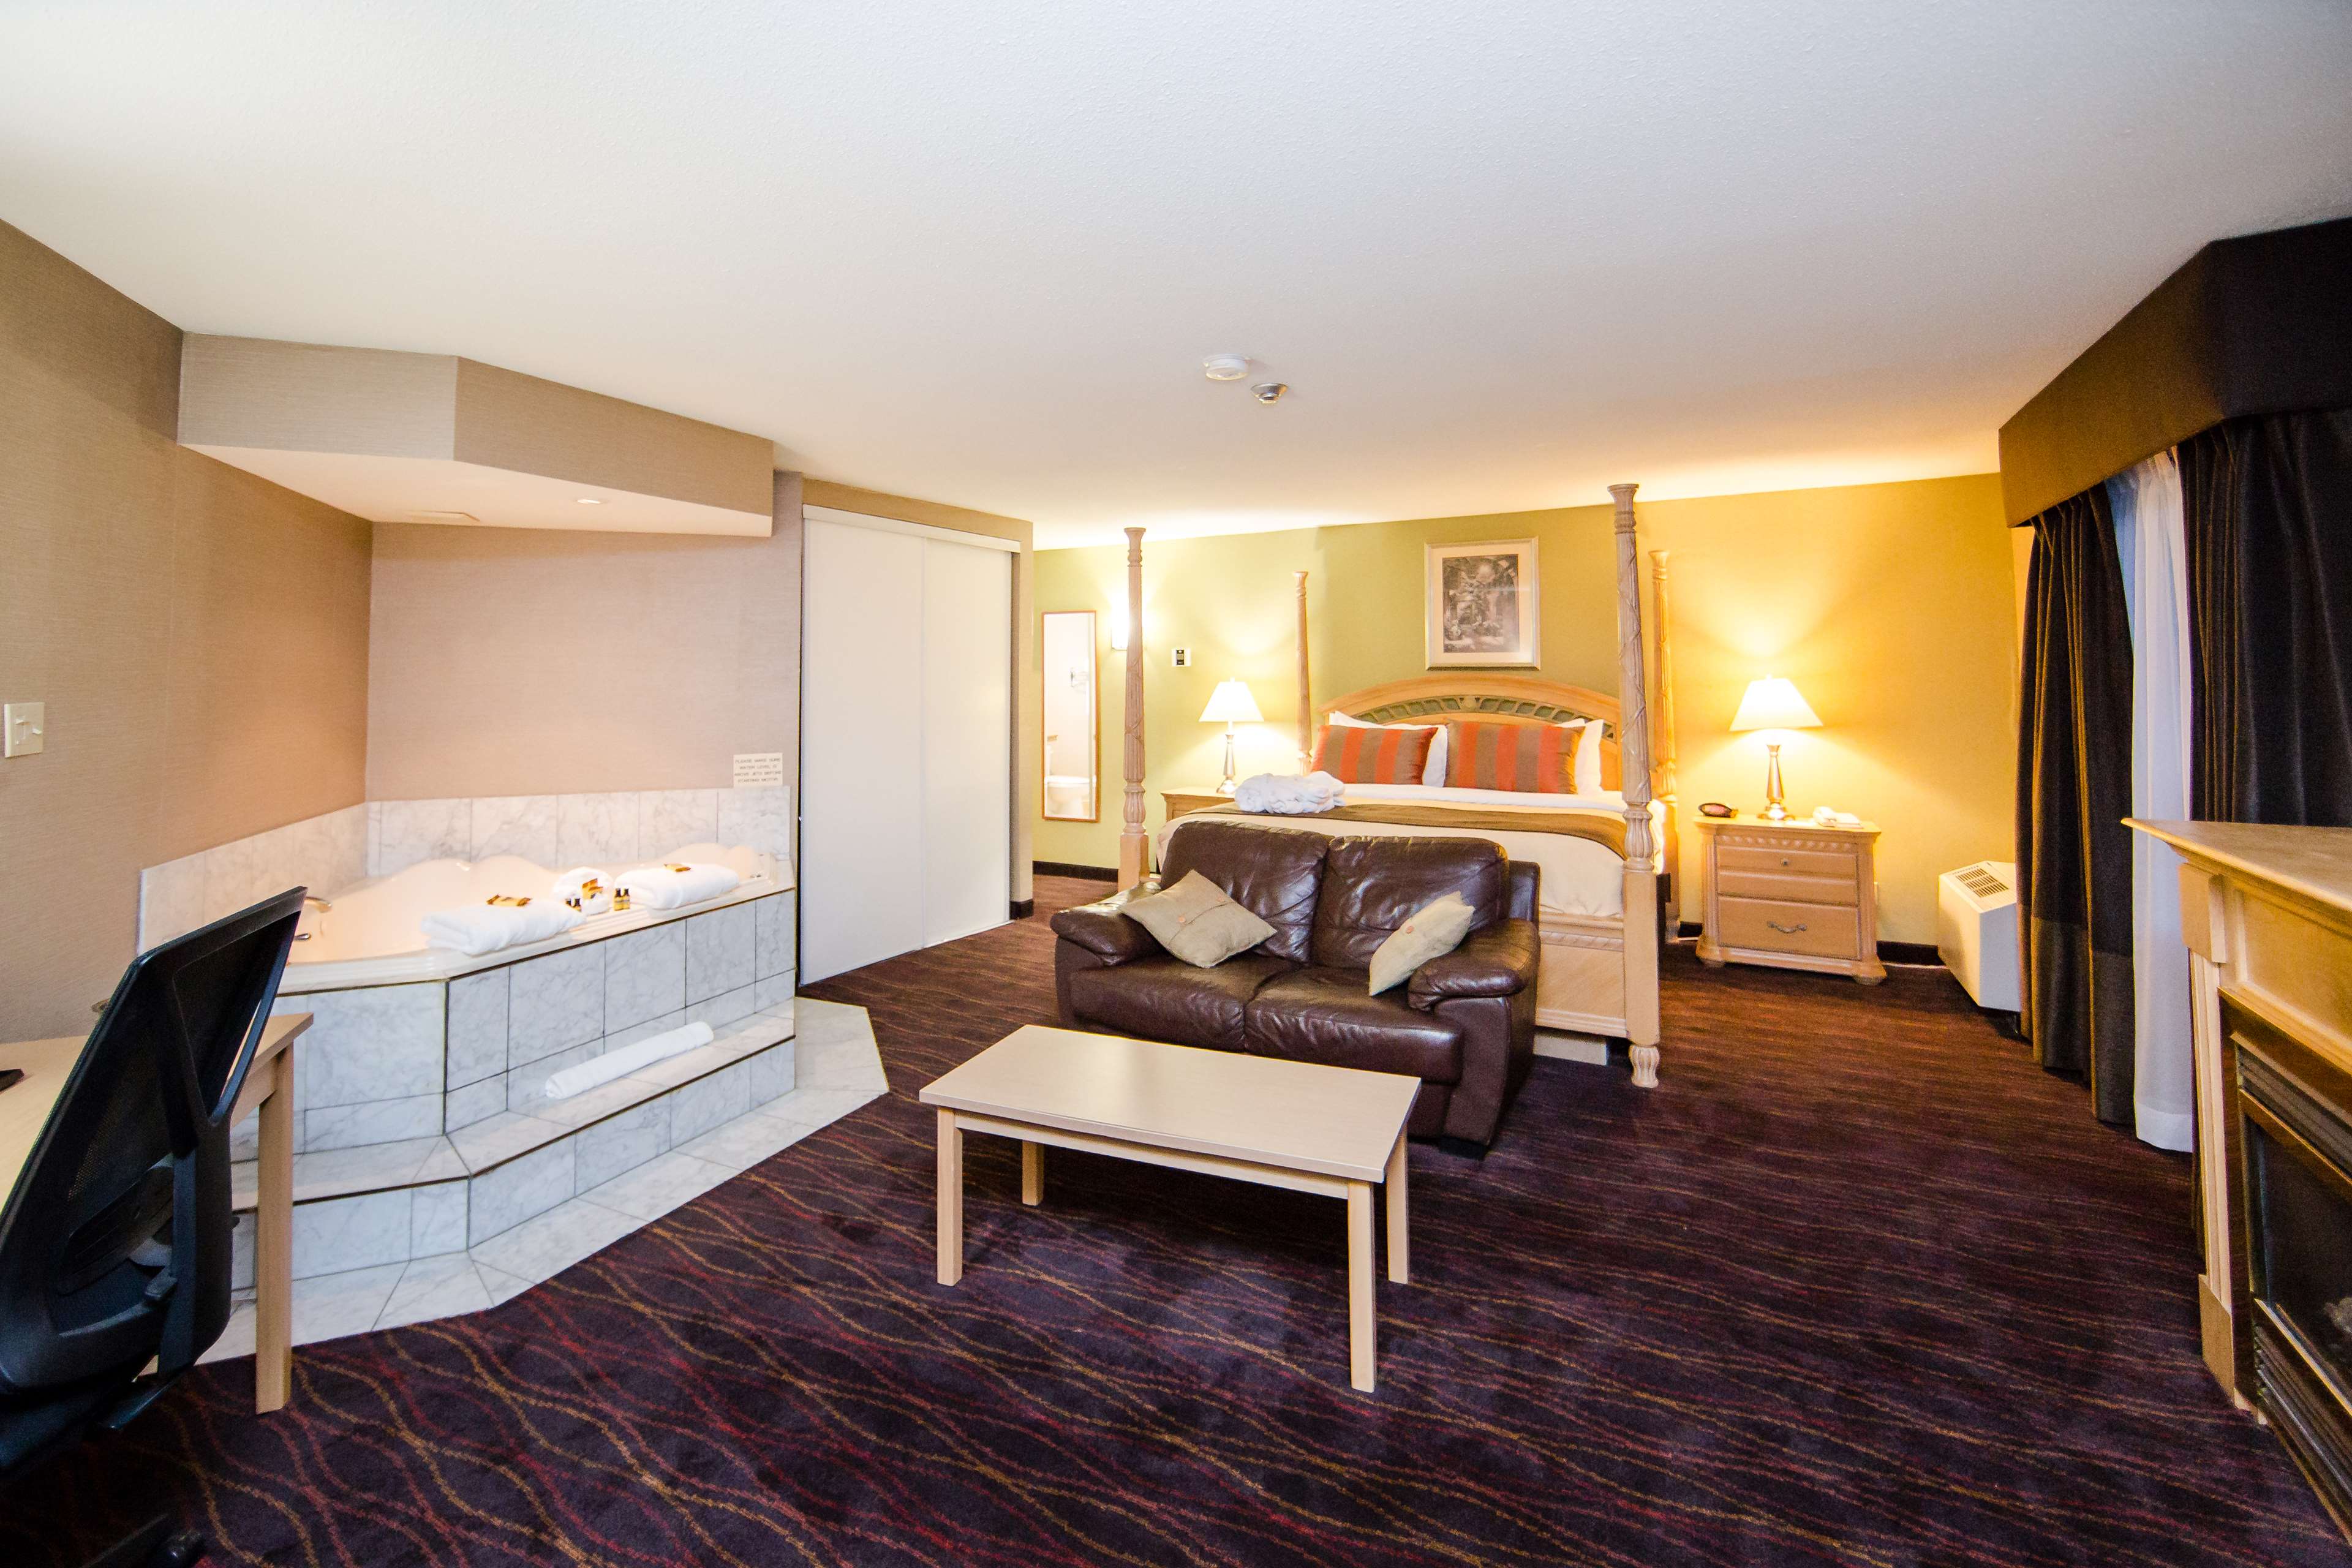 Whirlpool Executive King Room Best Western Plus Ottawa Kanata Hotel & Conference Centre Ottawa (613)828-2741